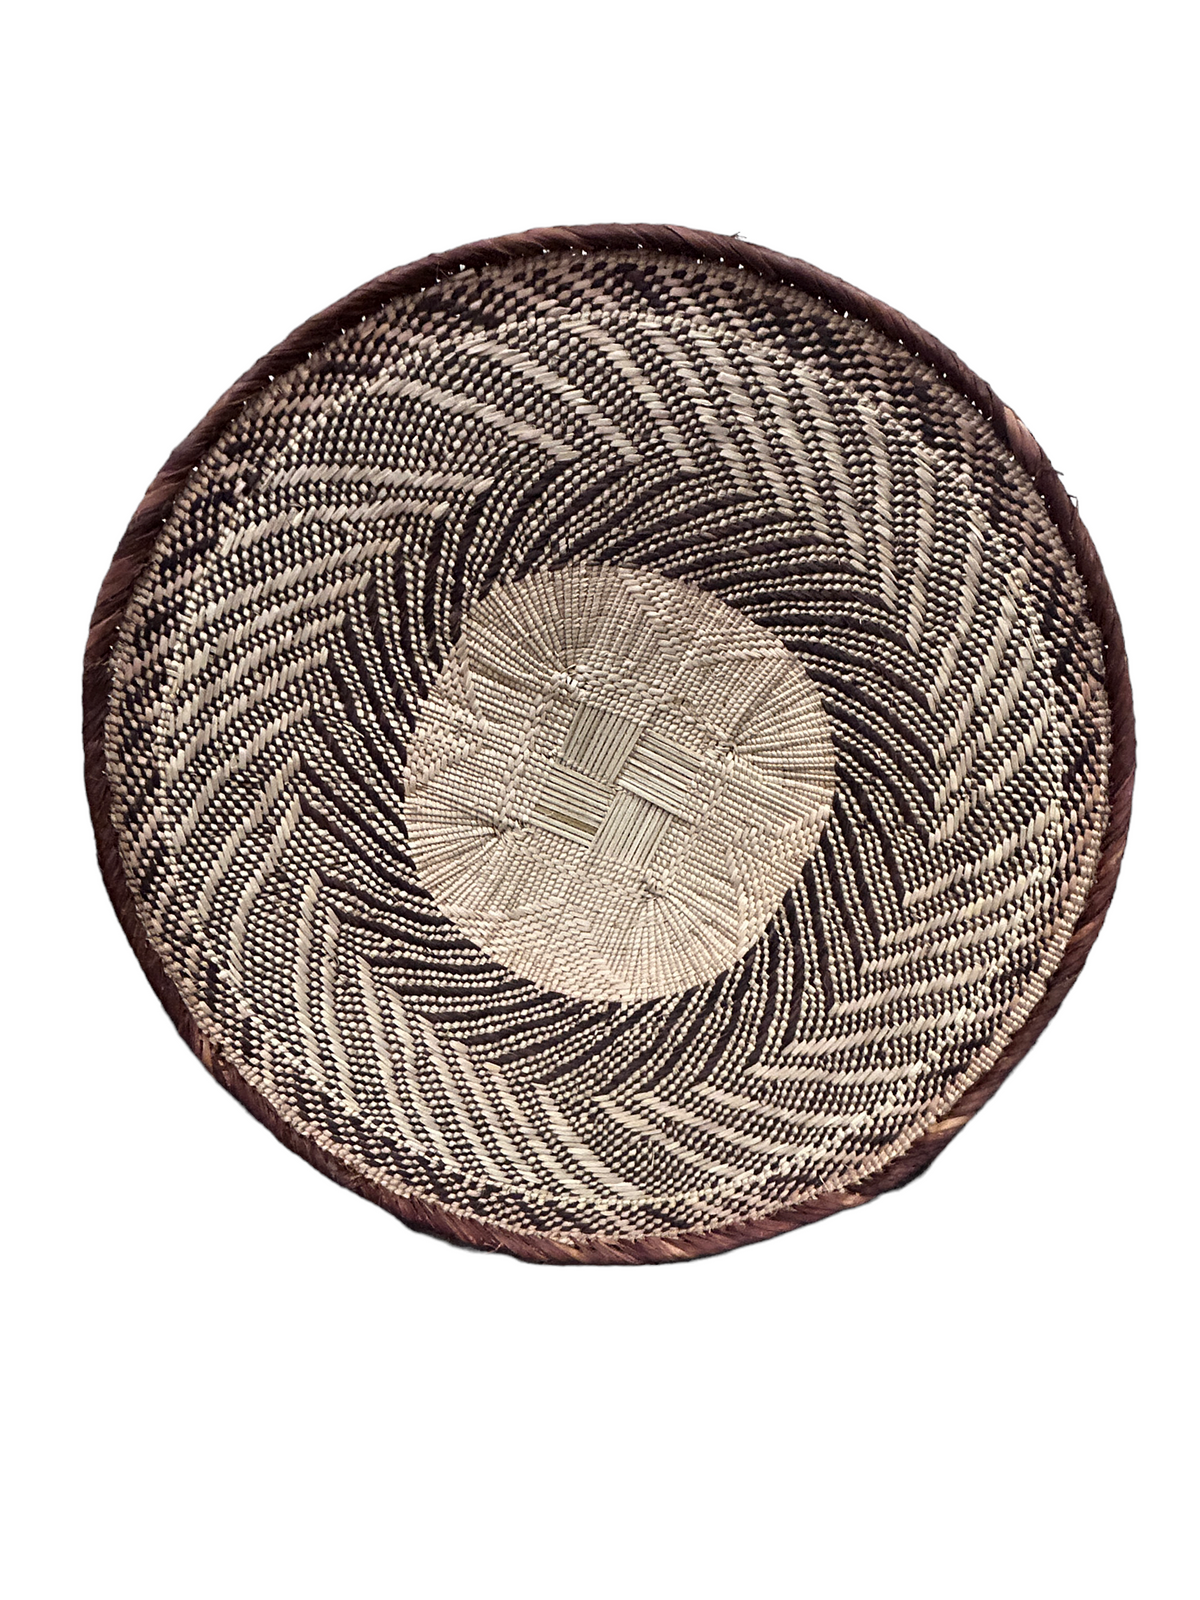 Tonga Basket Natural (60-07)